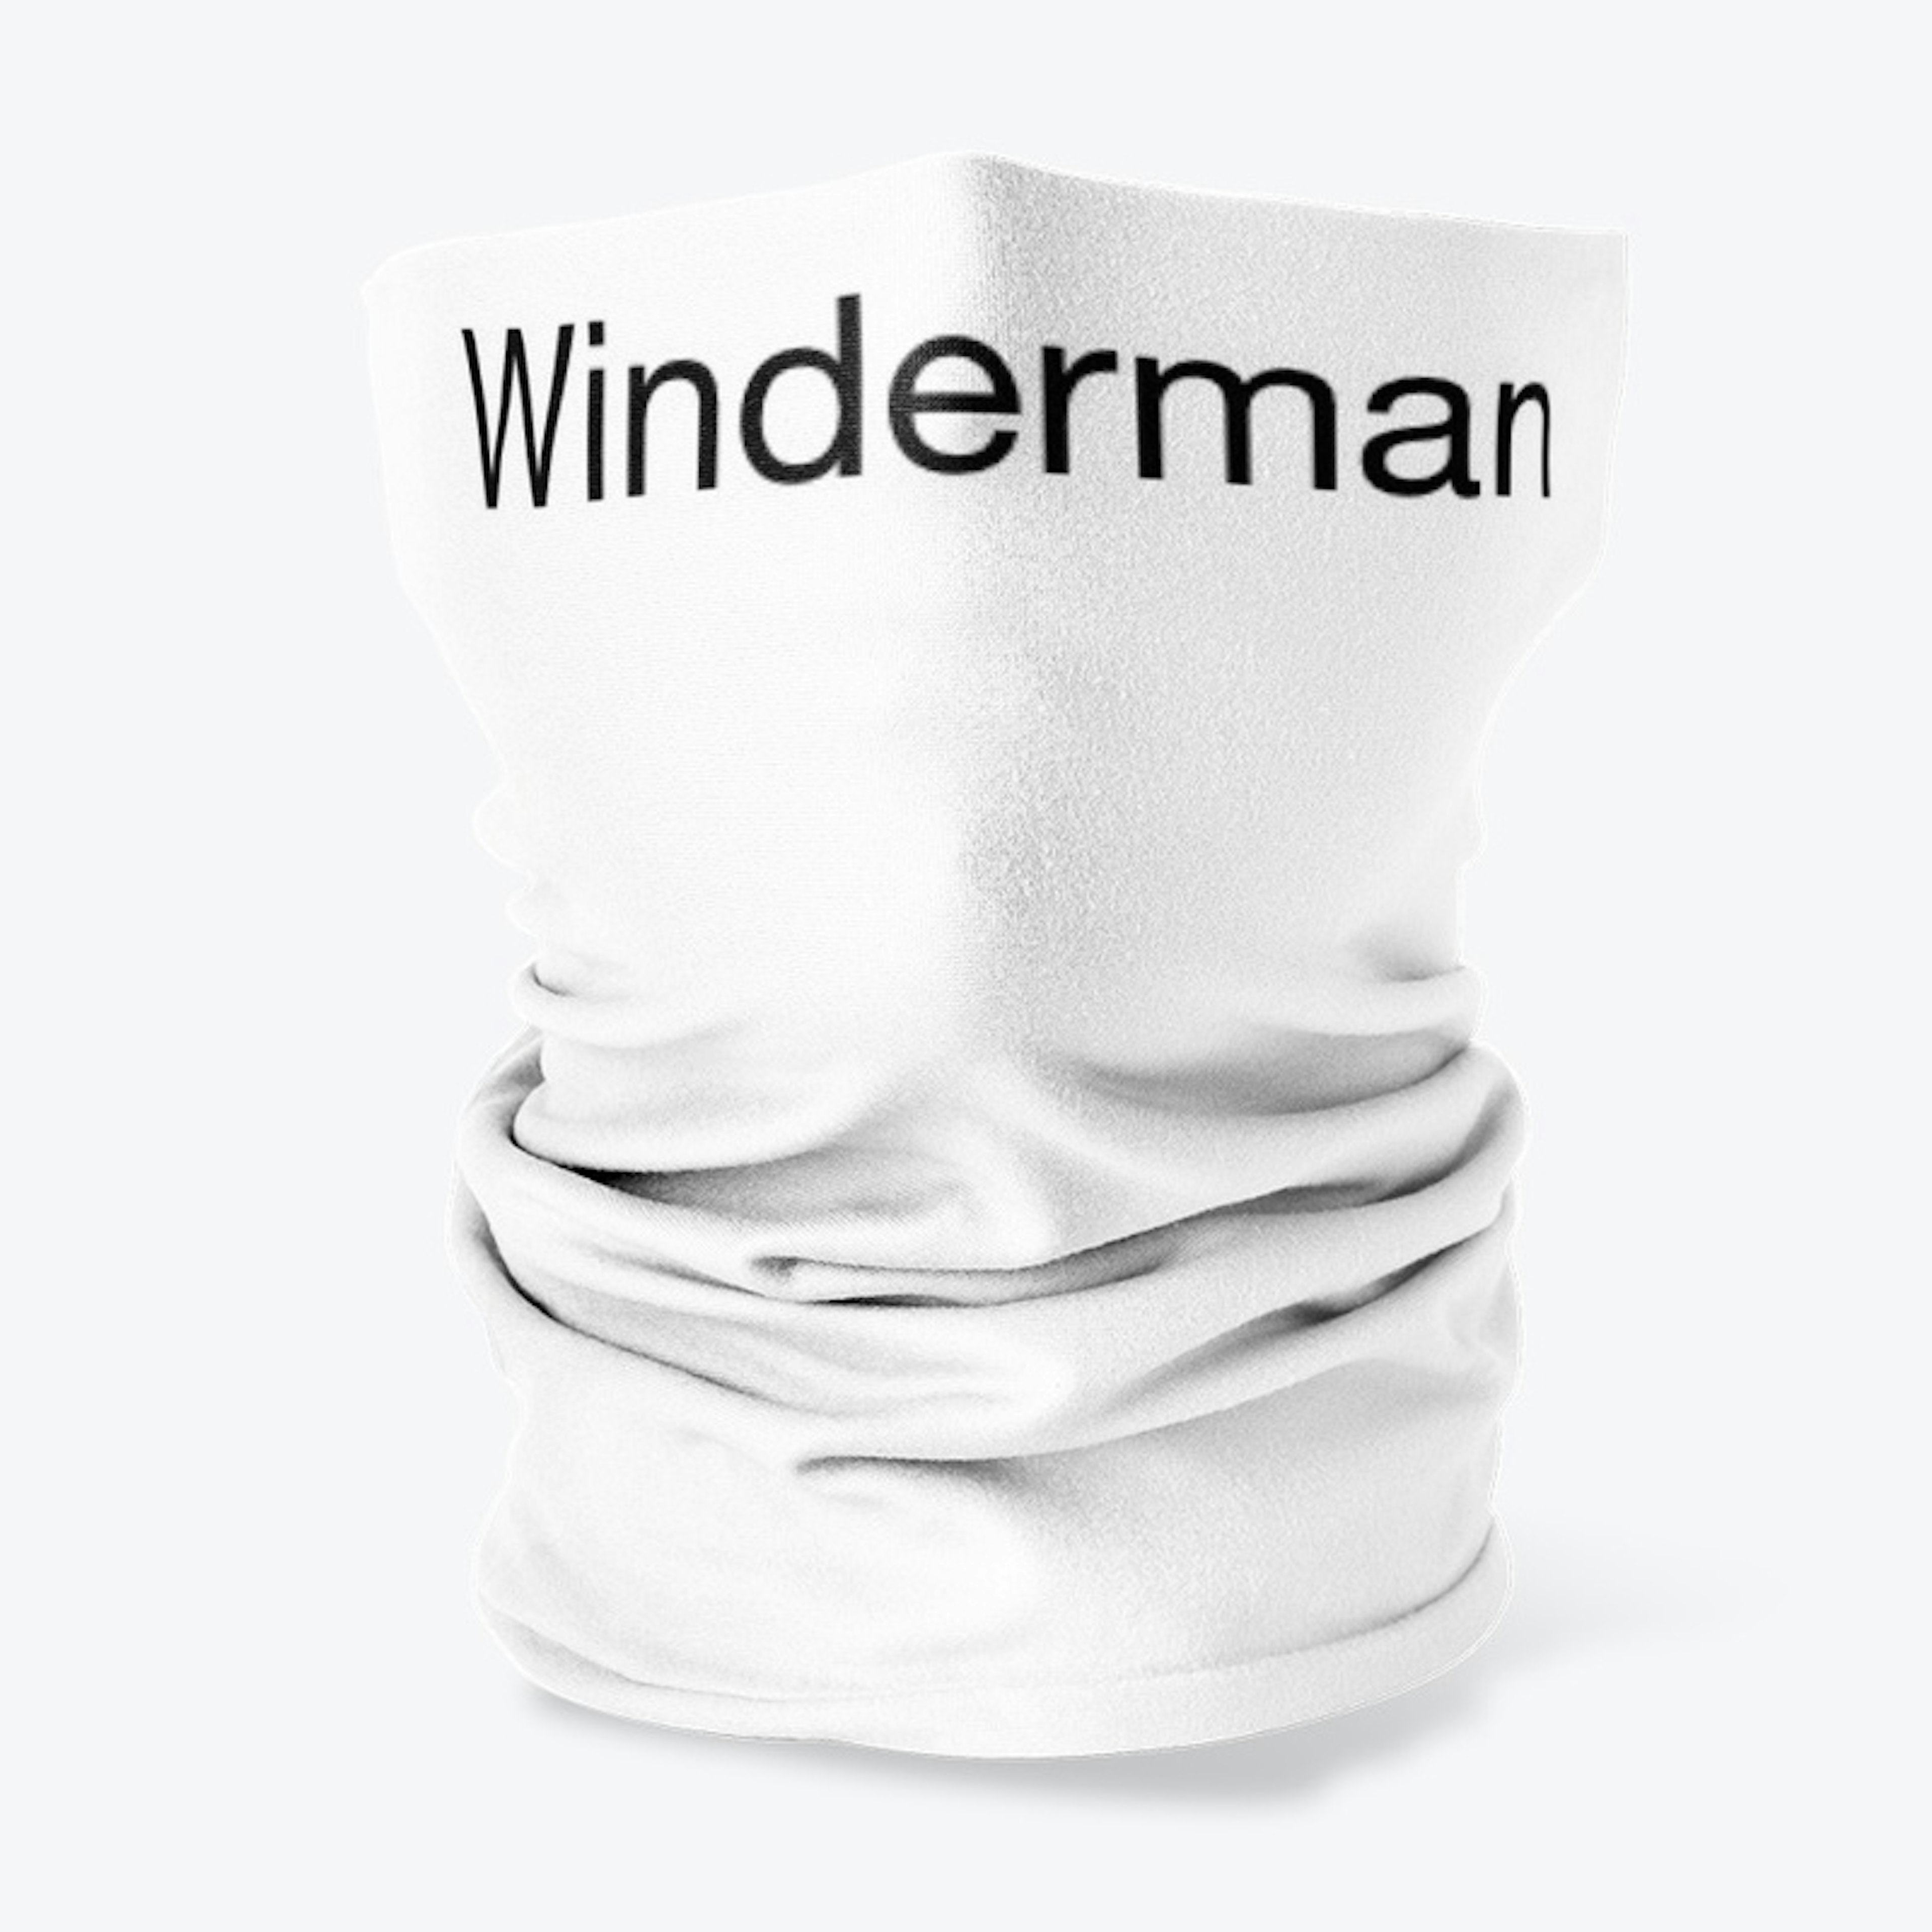 Winderman